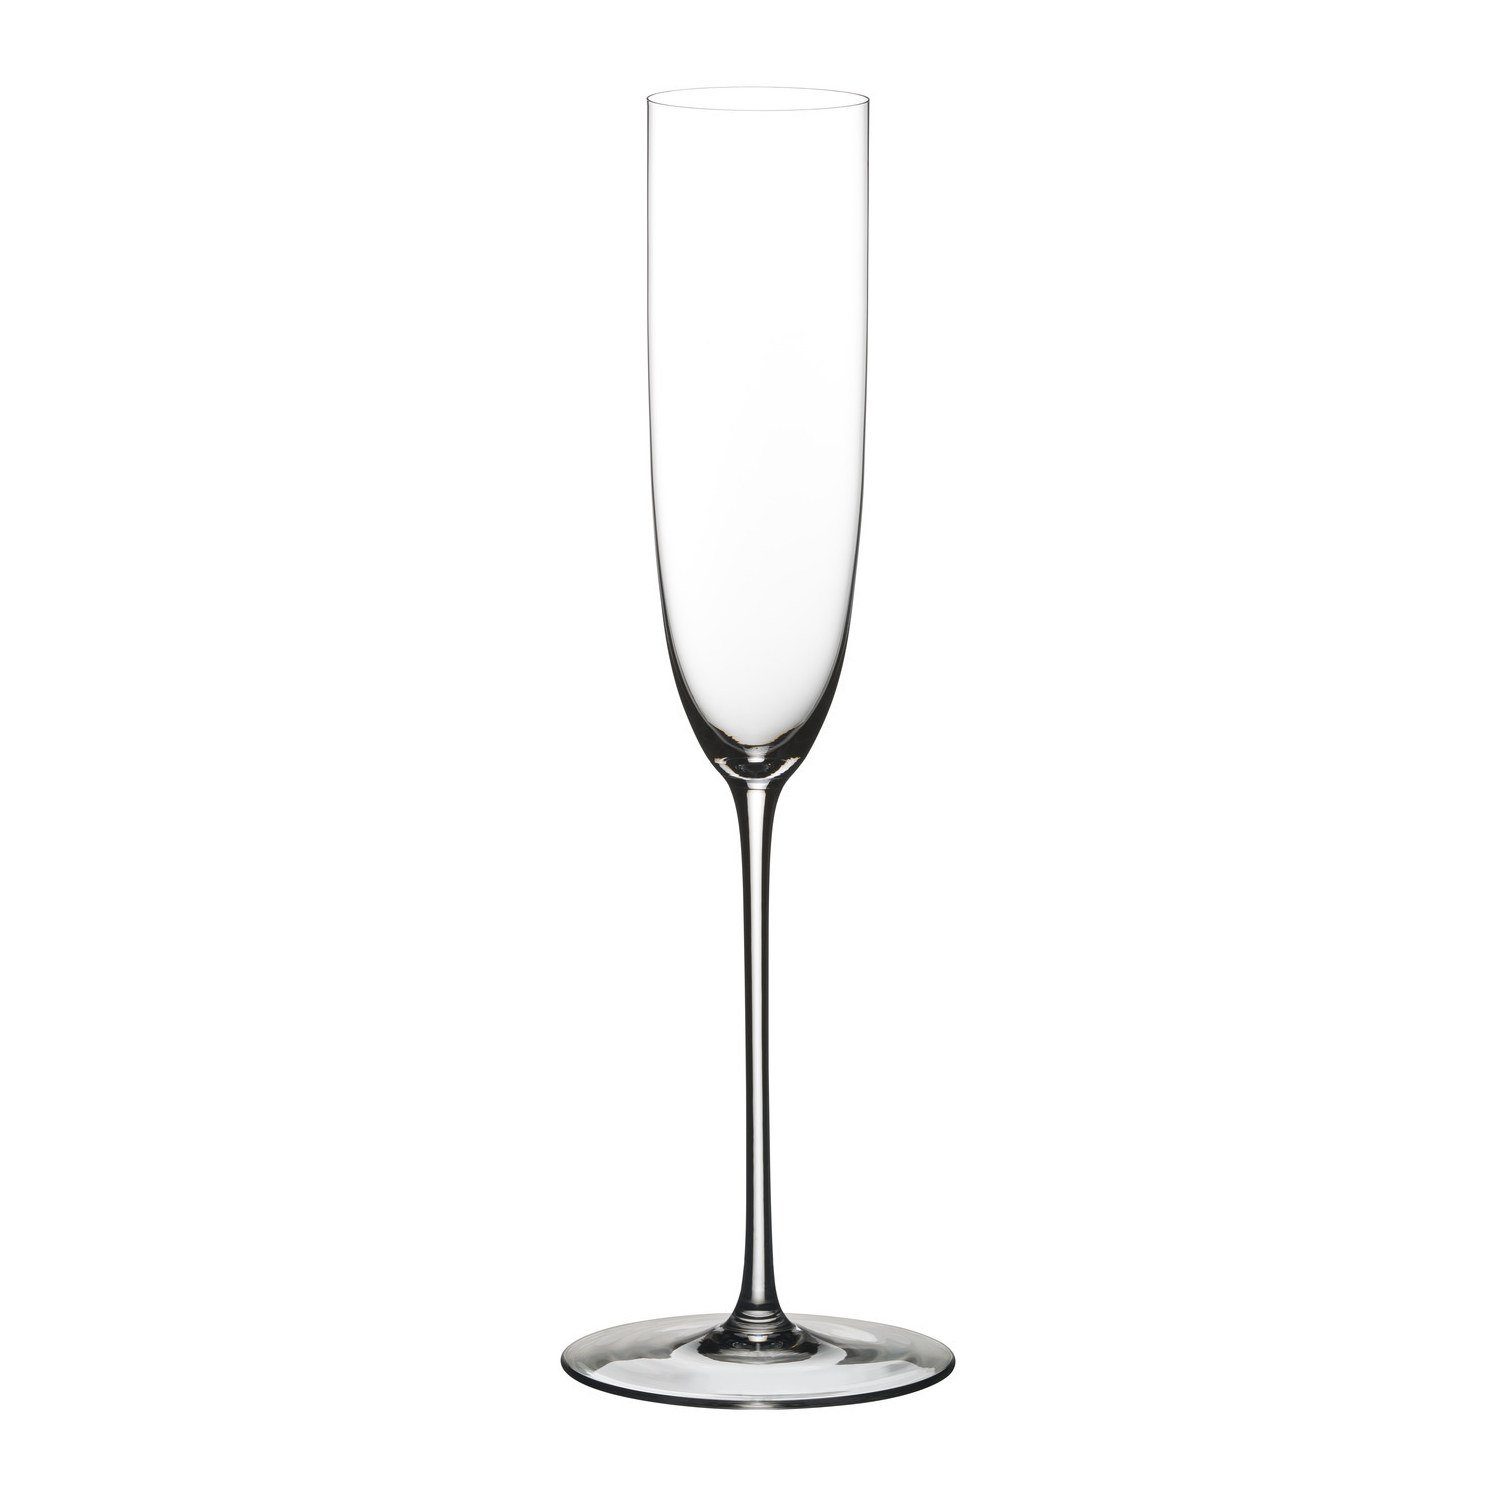 RIEDEL Glas Champagnerglas Superleggero Champagner Flöte, Kristallglas